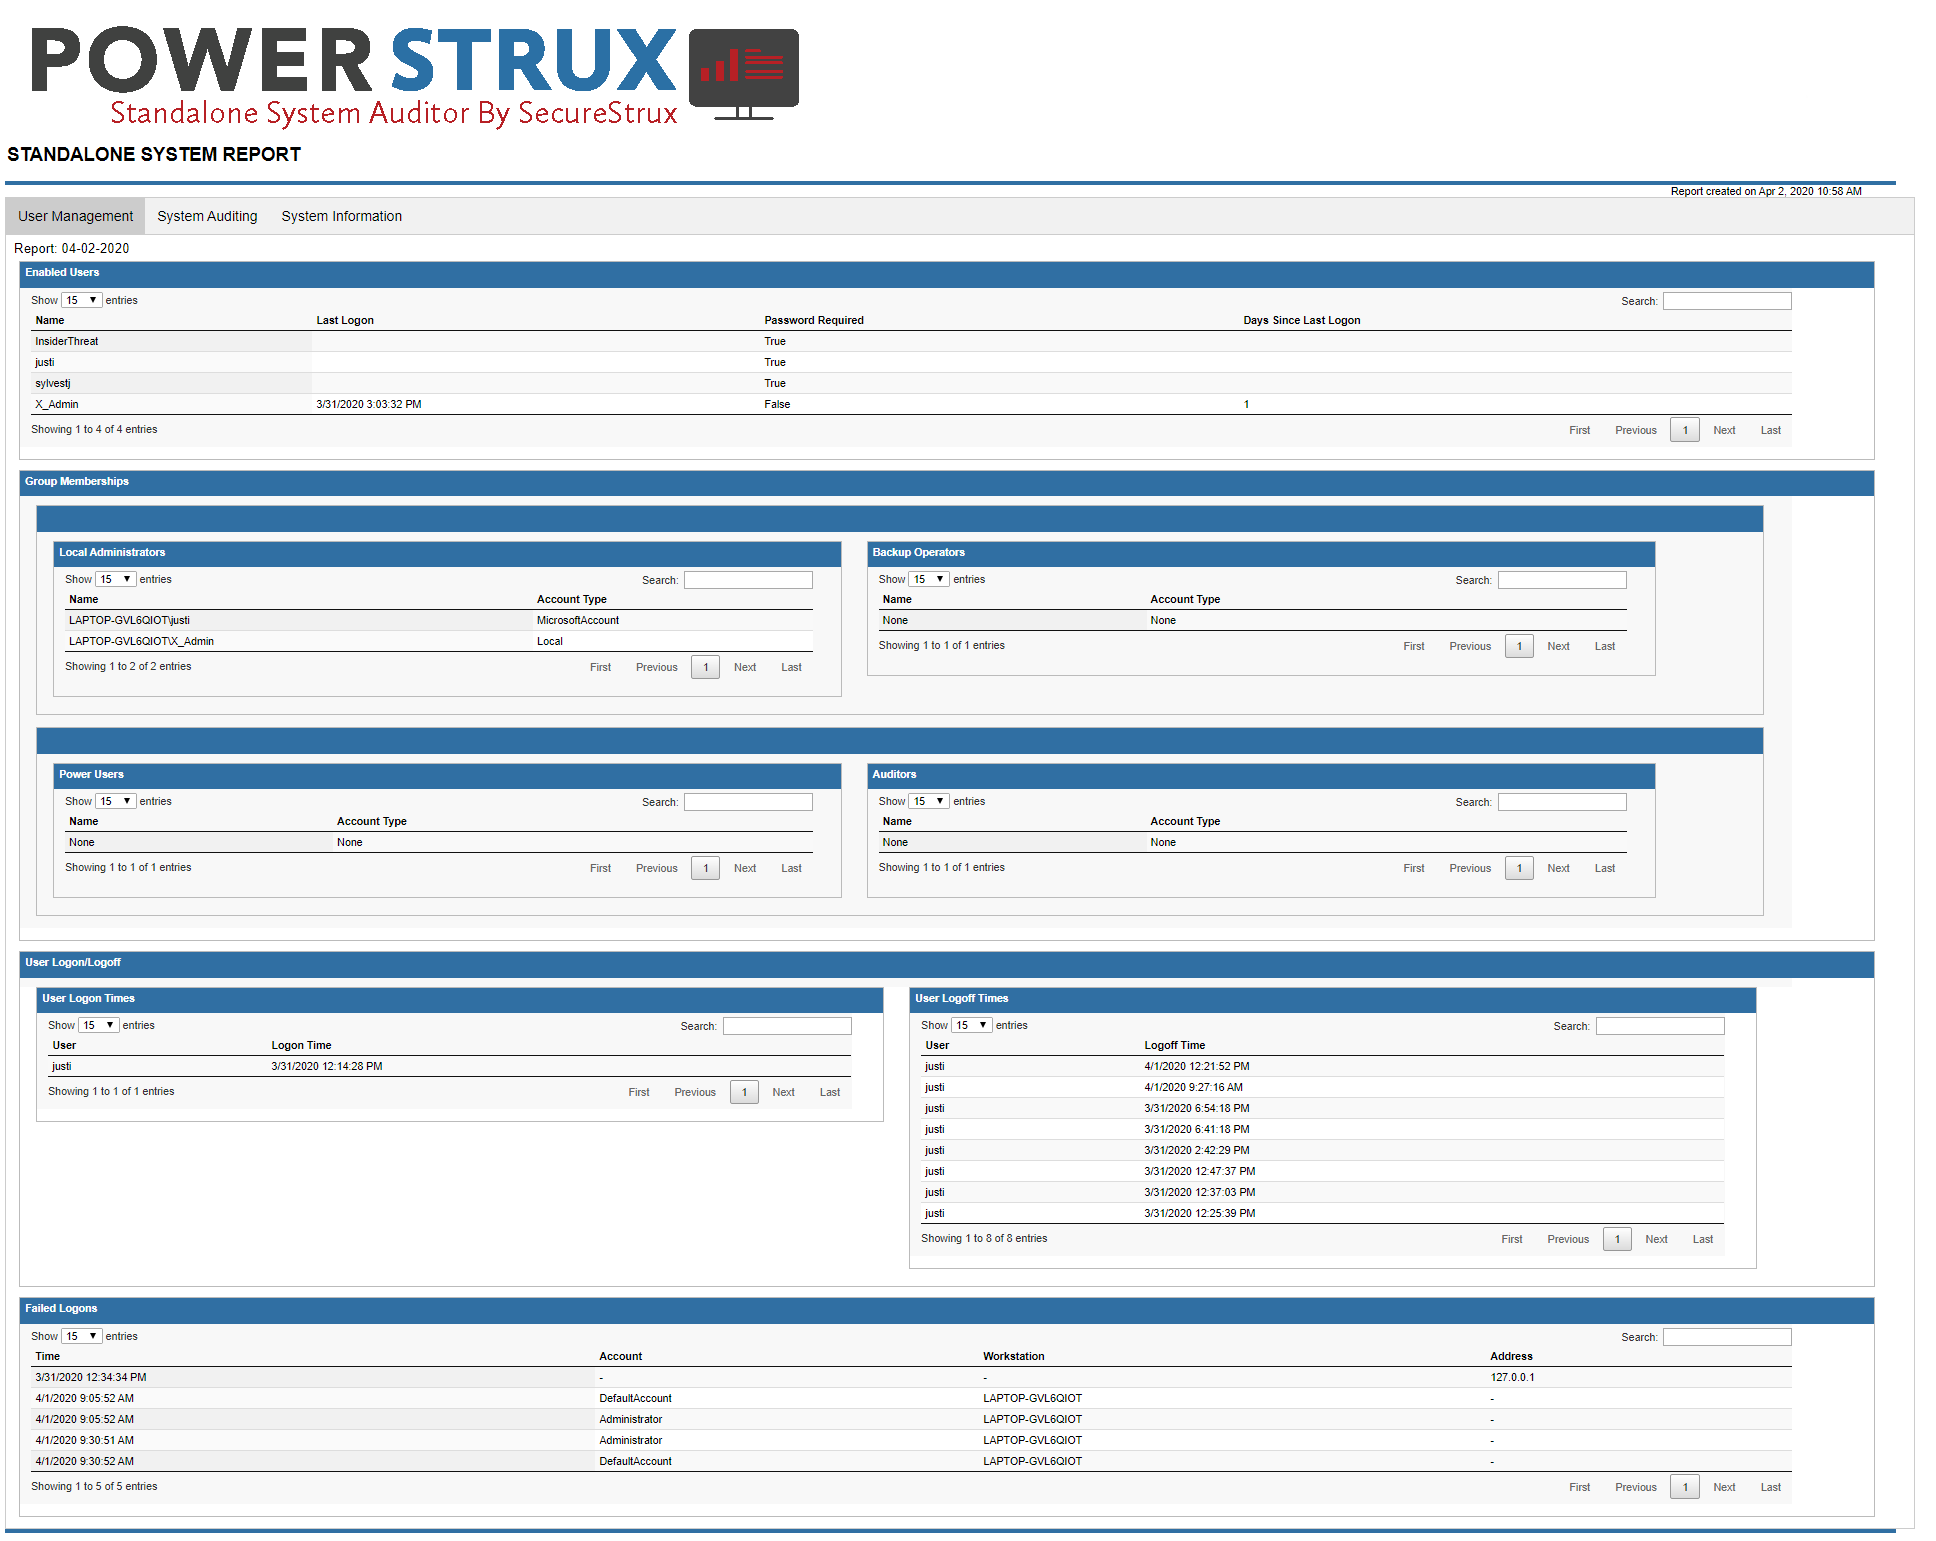 PowerStrux - Standalone System Auditor - User Management